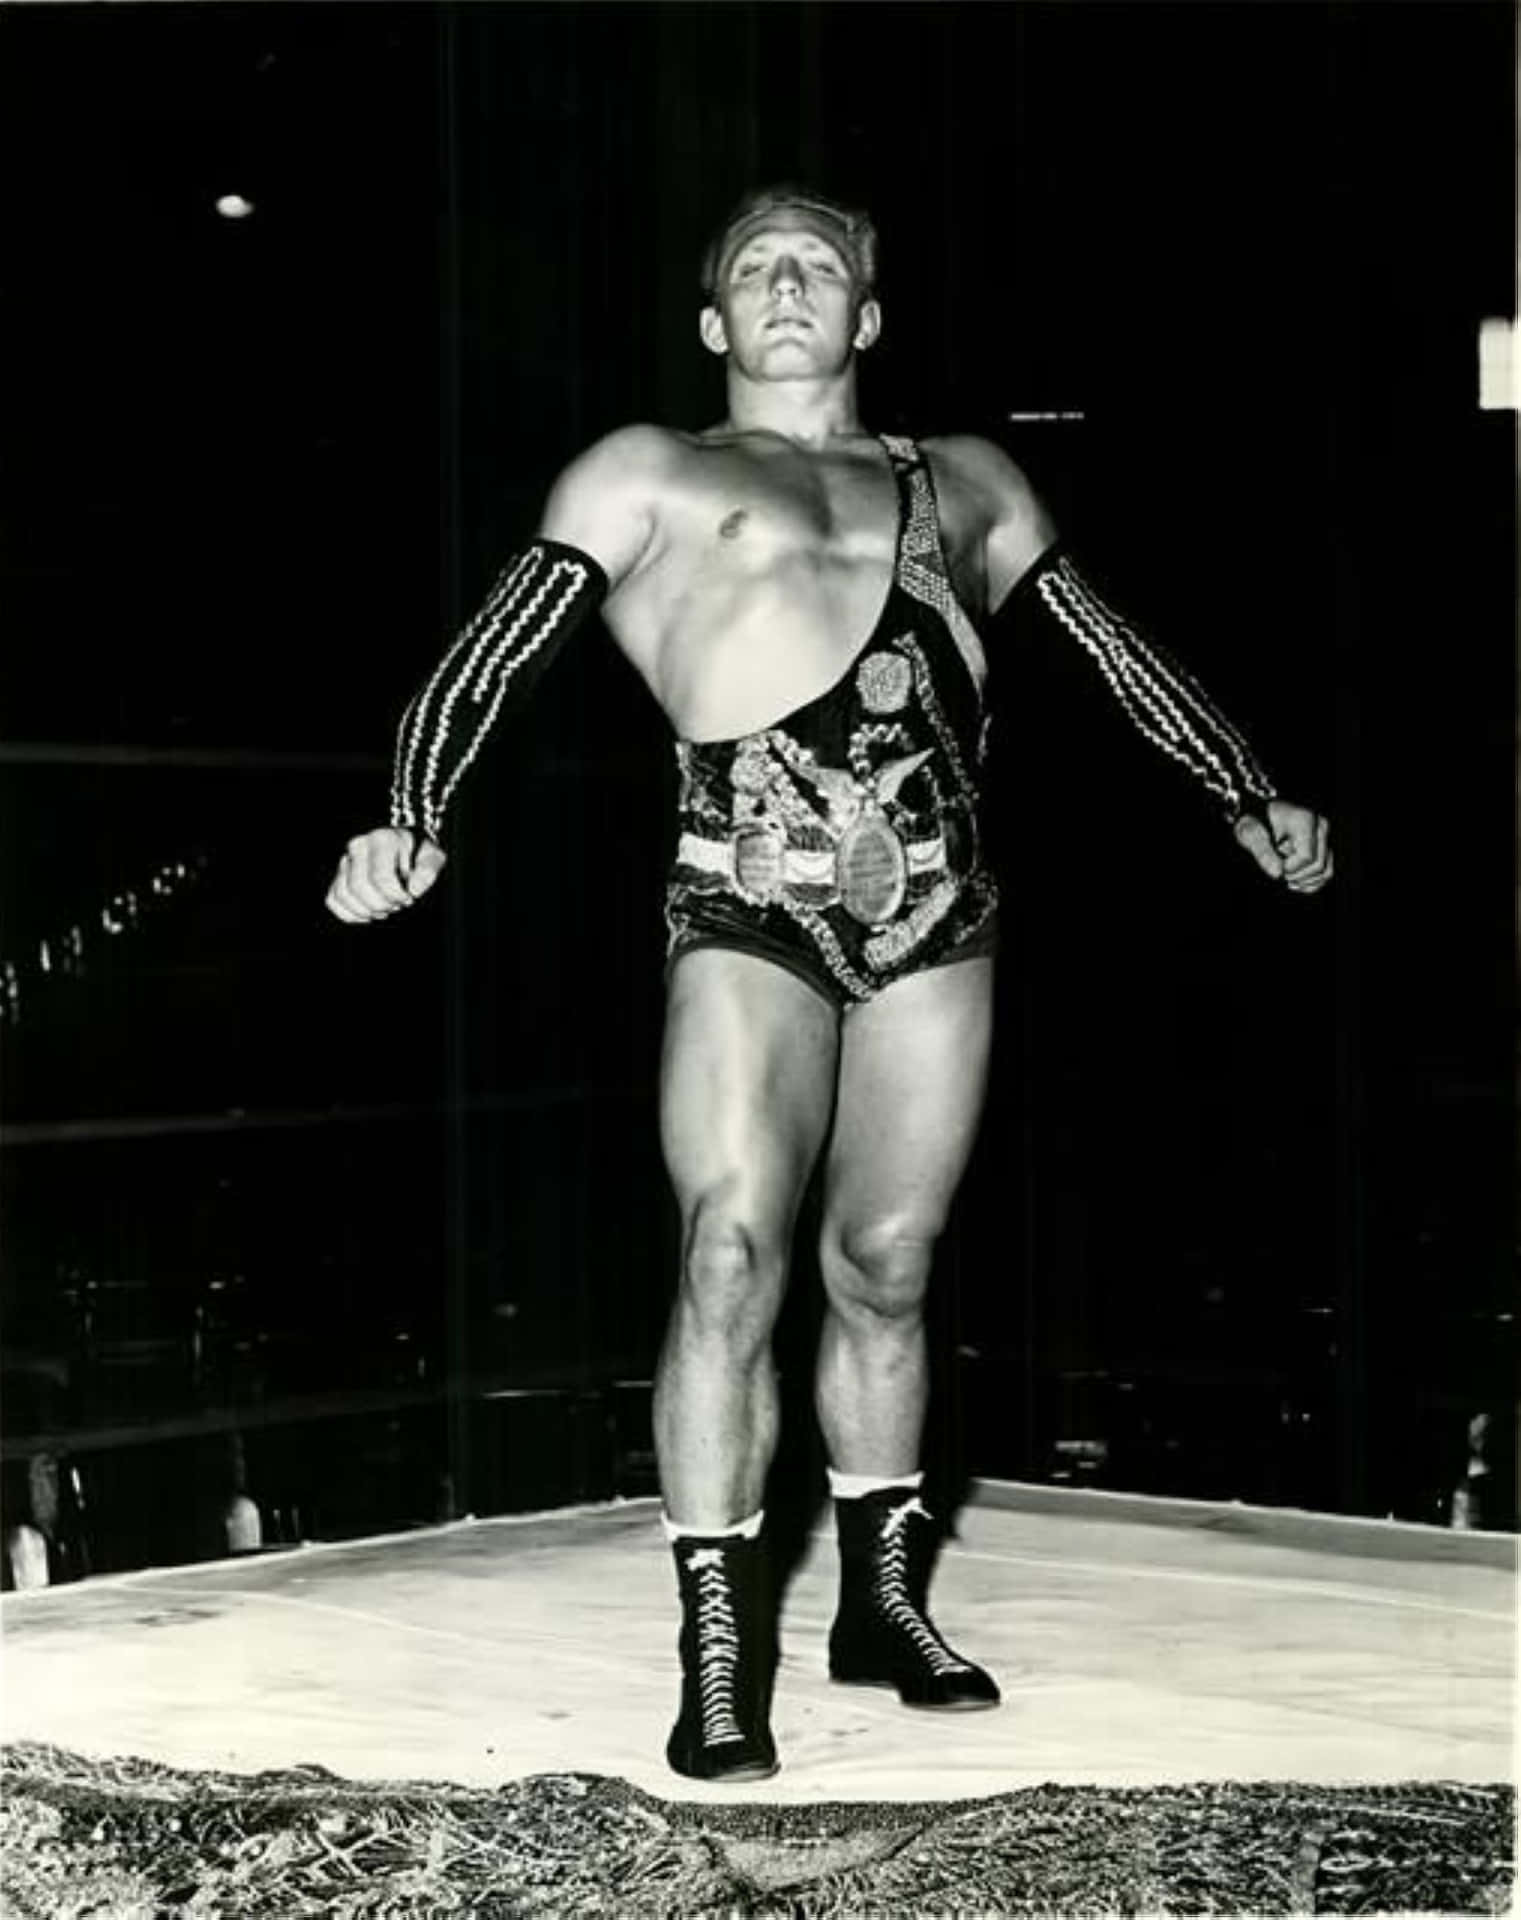 Caption: Legendary Heavyweight Wrestler, Buddy Rogers in Action Wallpaper